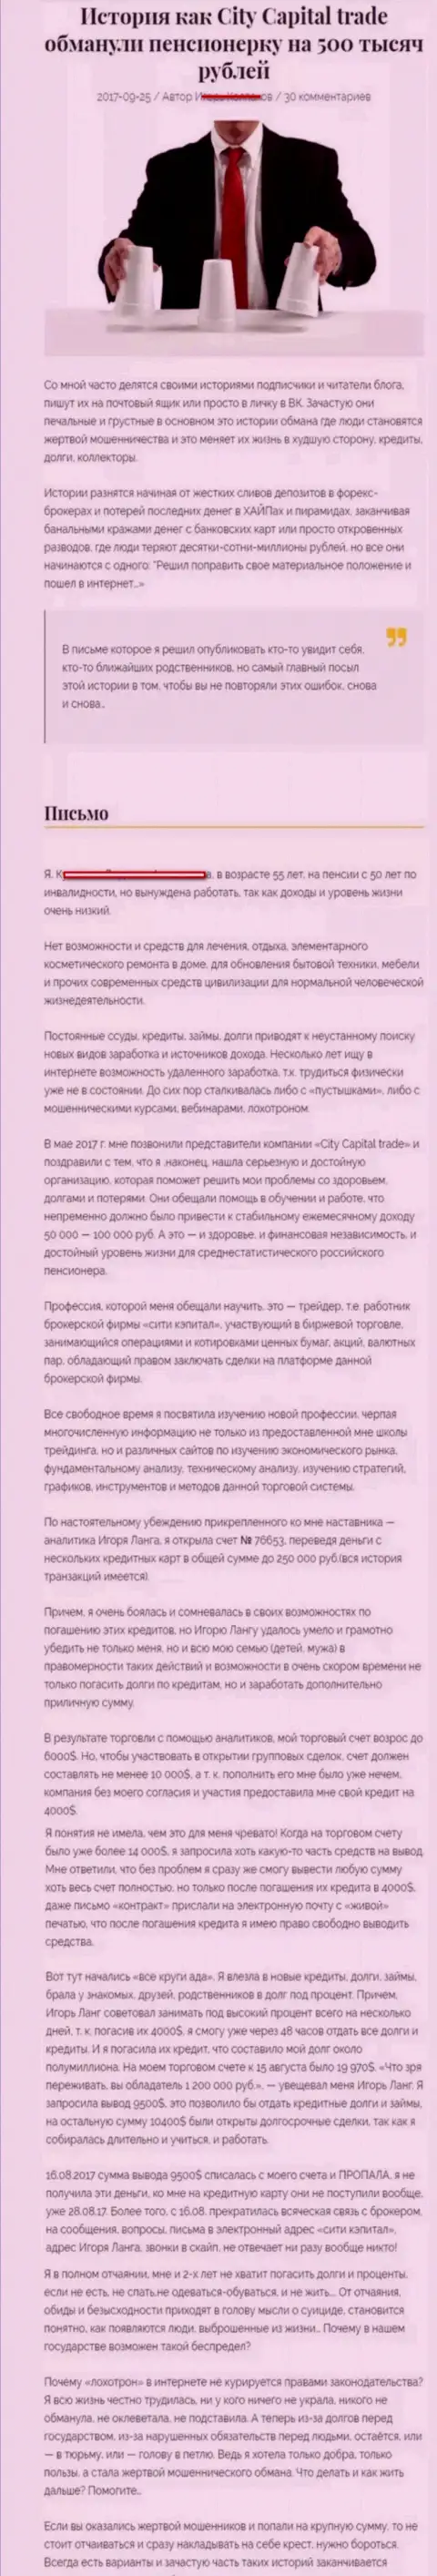 СитиКапиталТрейд обули клиентку пенсионного возраста - инвалида на общую сумму пятьсот тыс. рублей - МОШЕННИКИ !!!